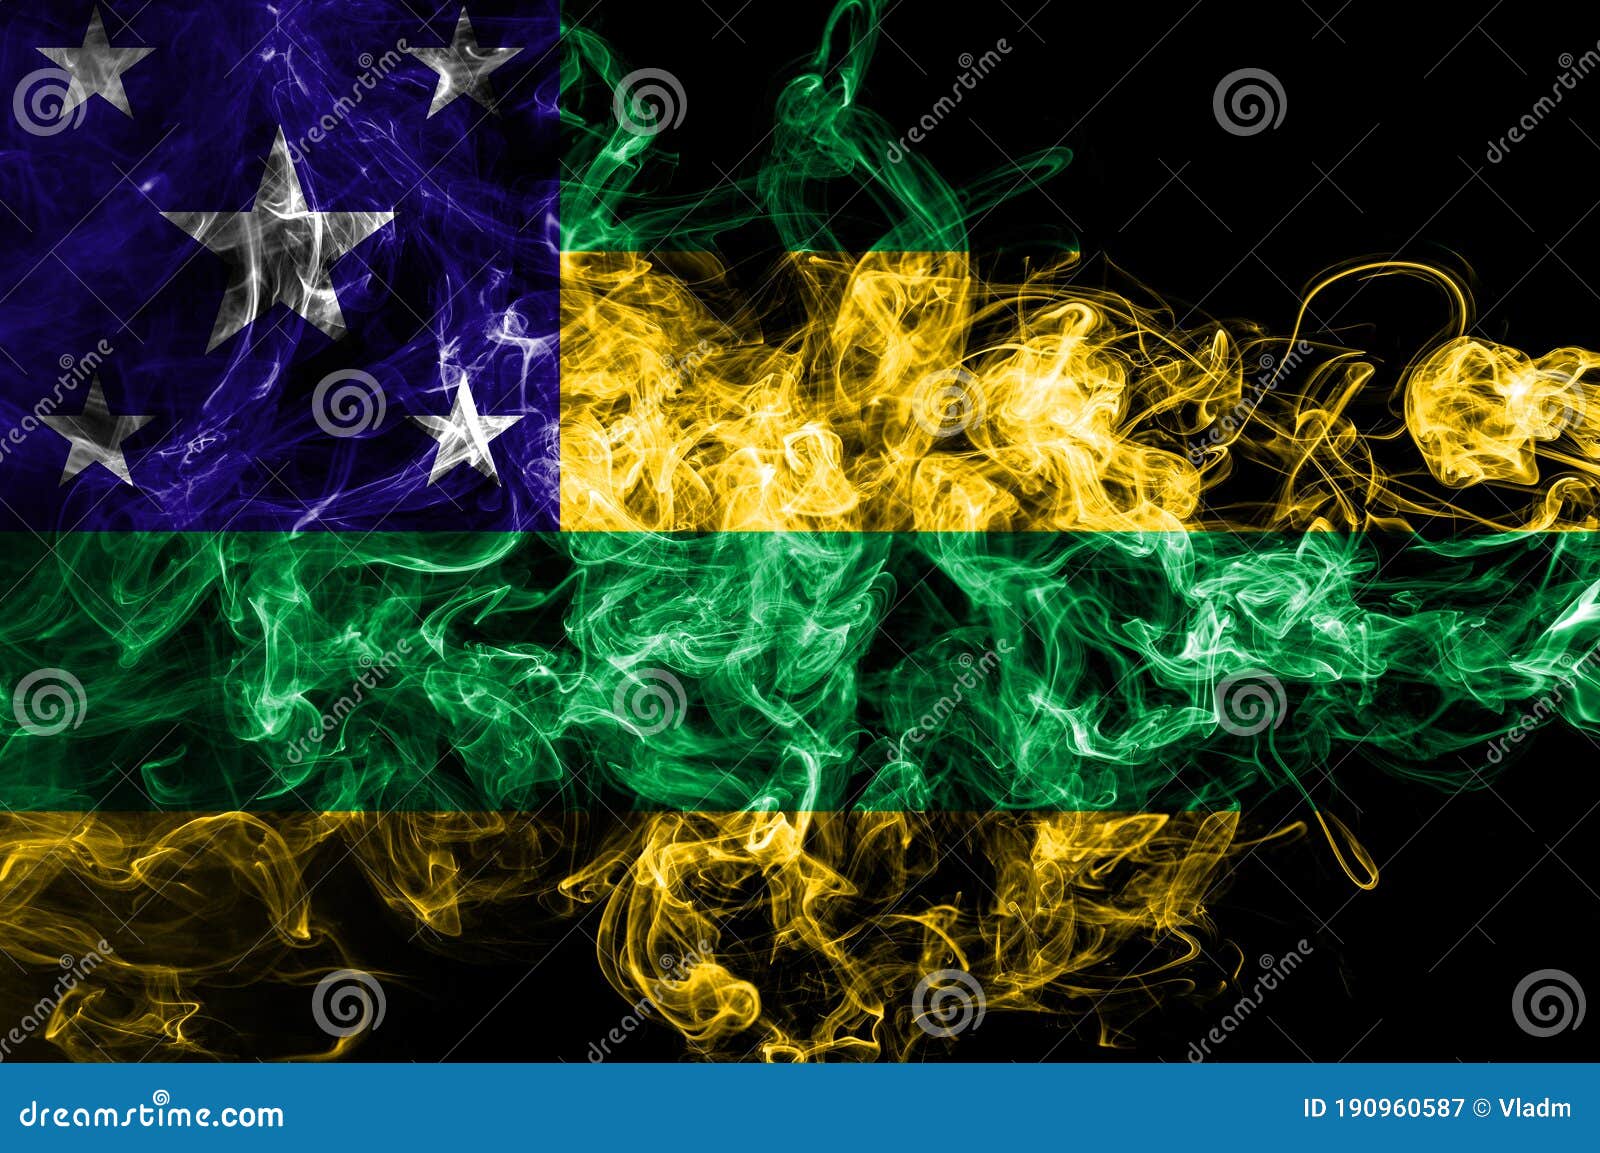 sergipe smoke flag, state of brazil